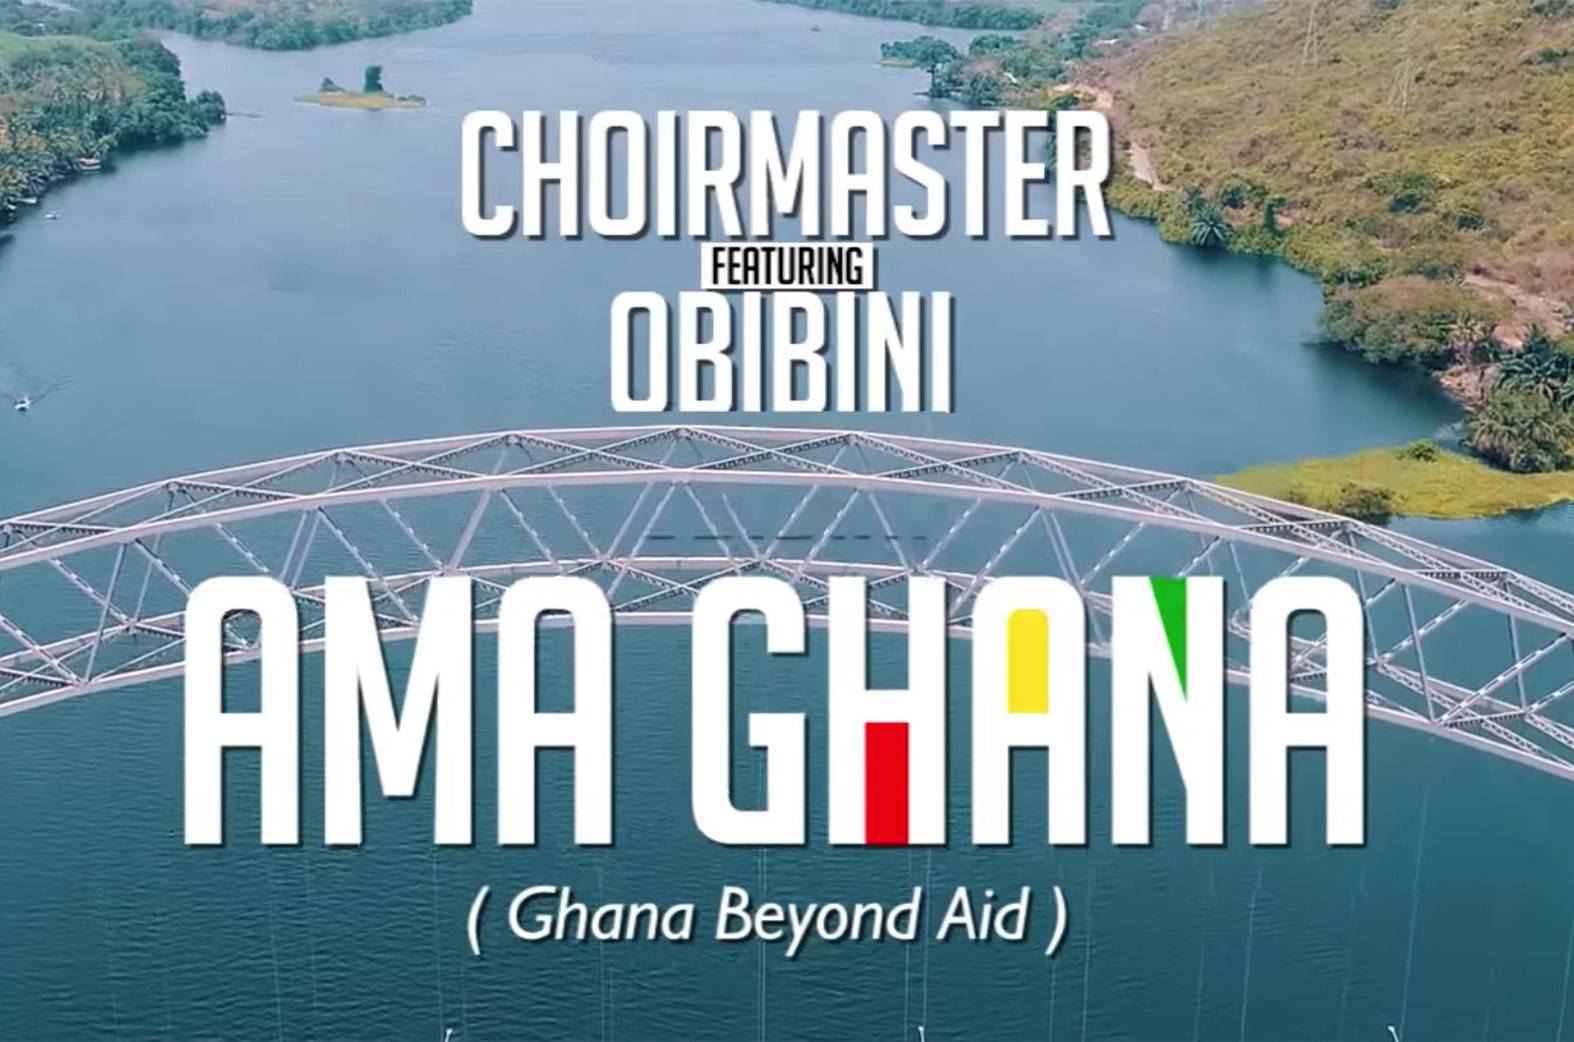 Ama Ghana by Choir Master feat. Obibini